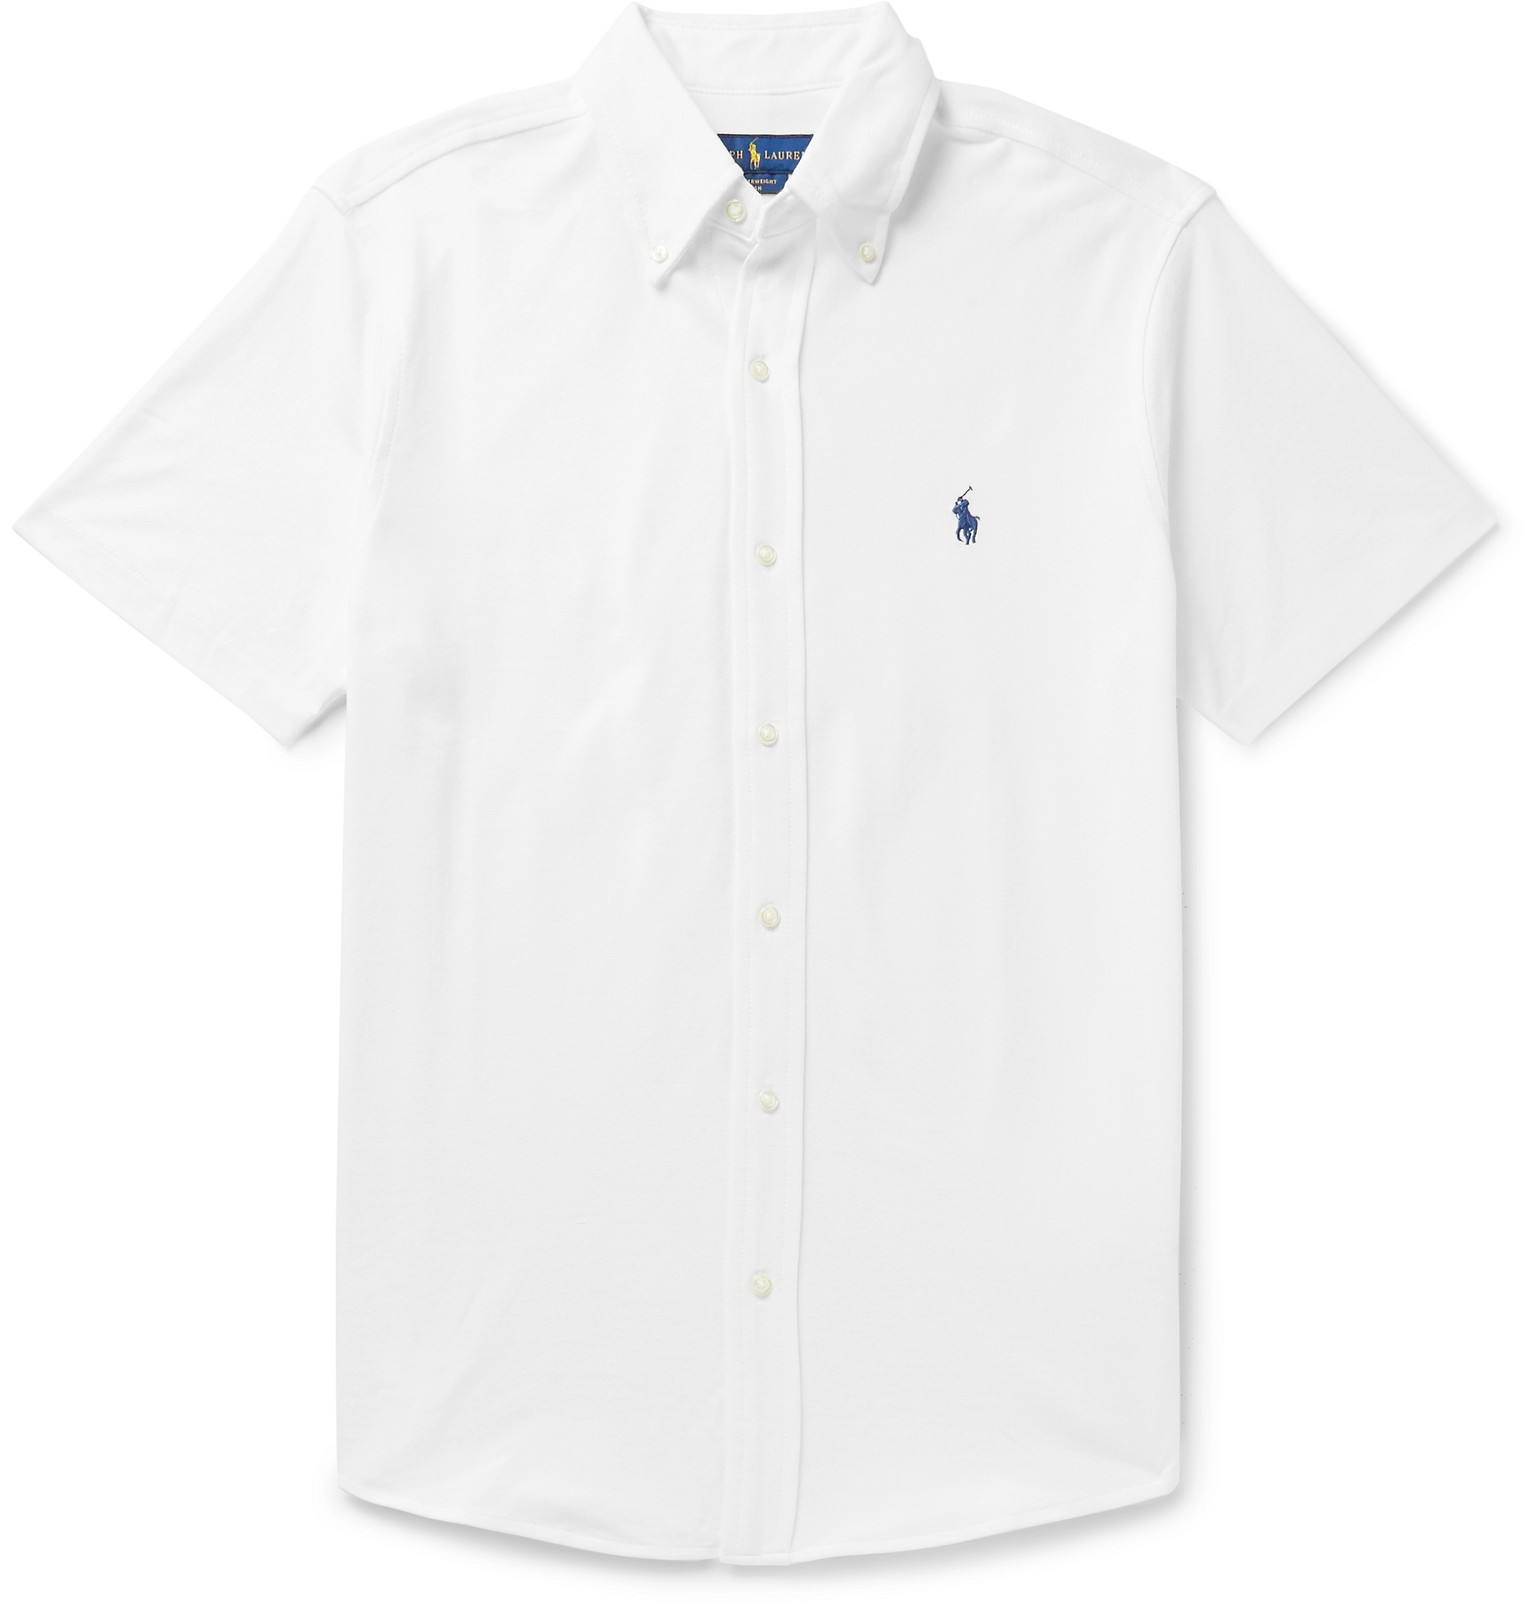 Polo Ralph Lauren Button Down Collar Cotton Piqué Shirt Men White The Fashionisto 4634